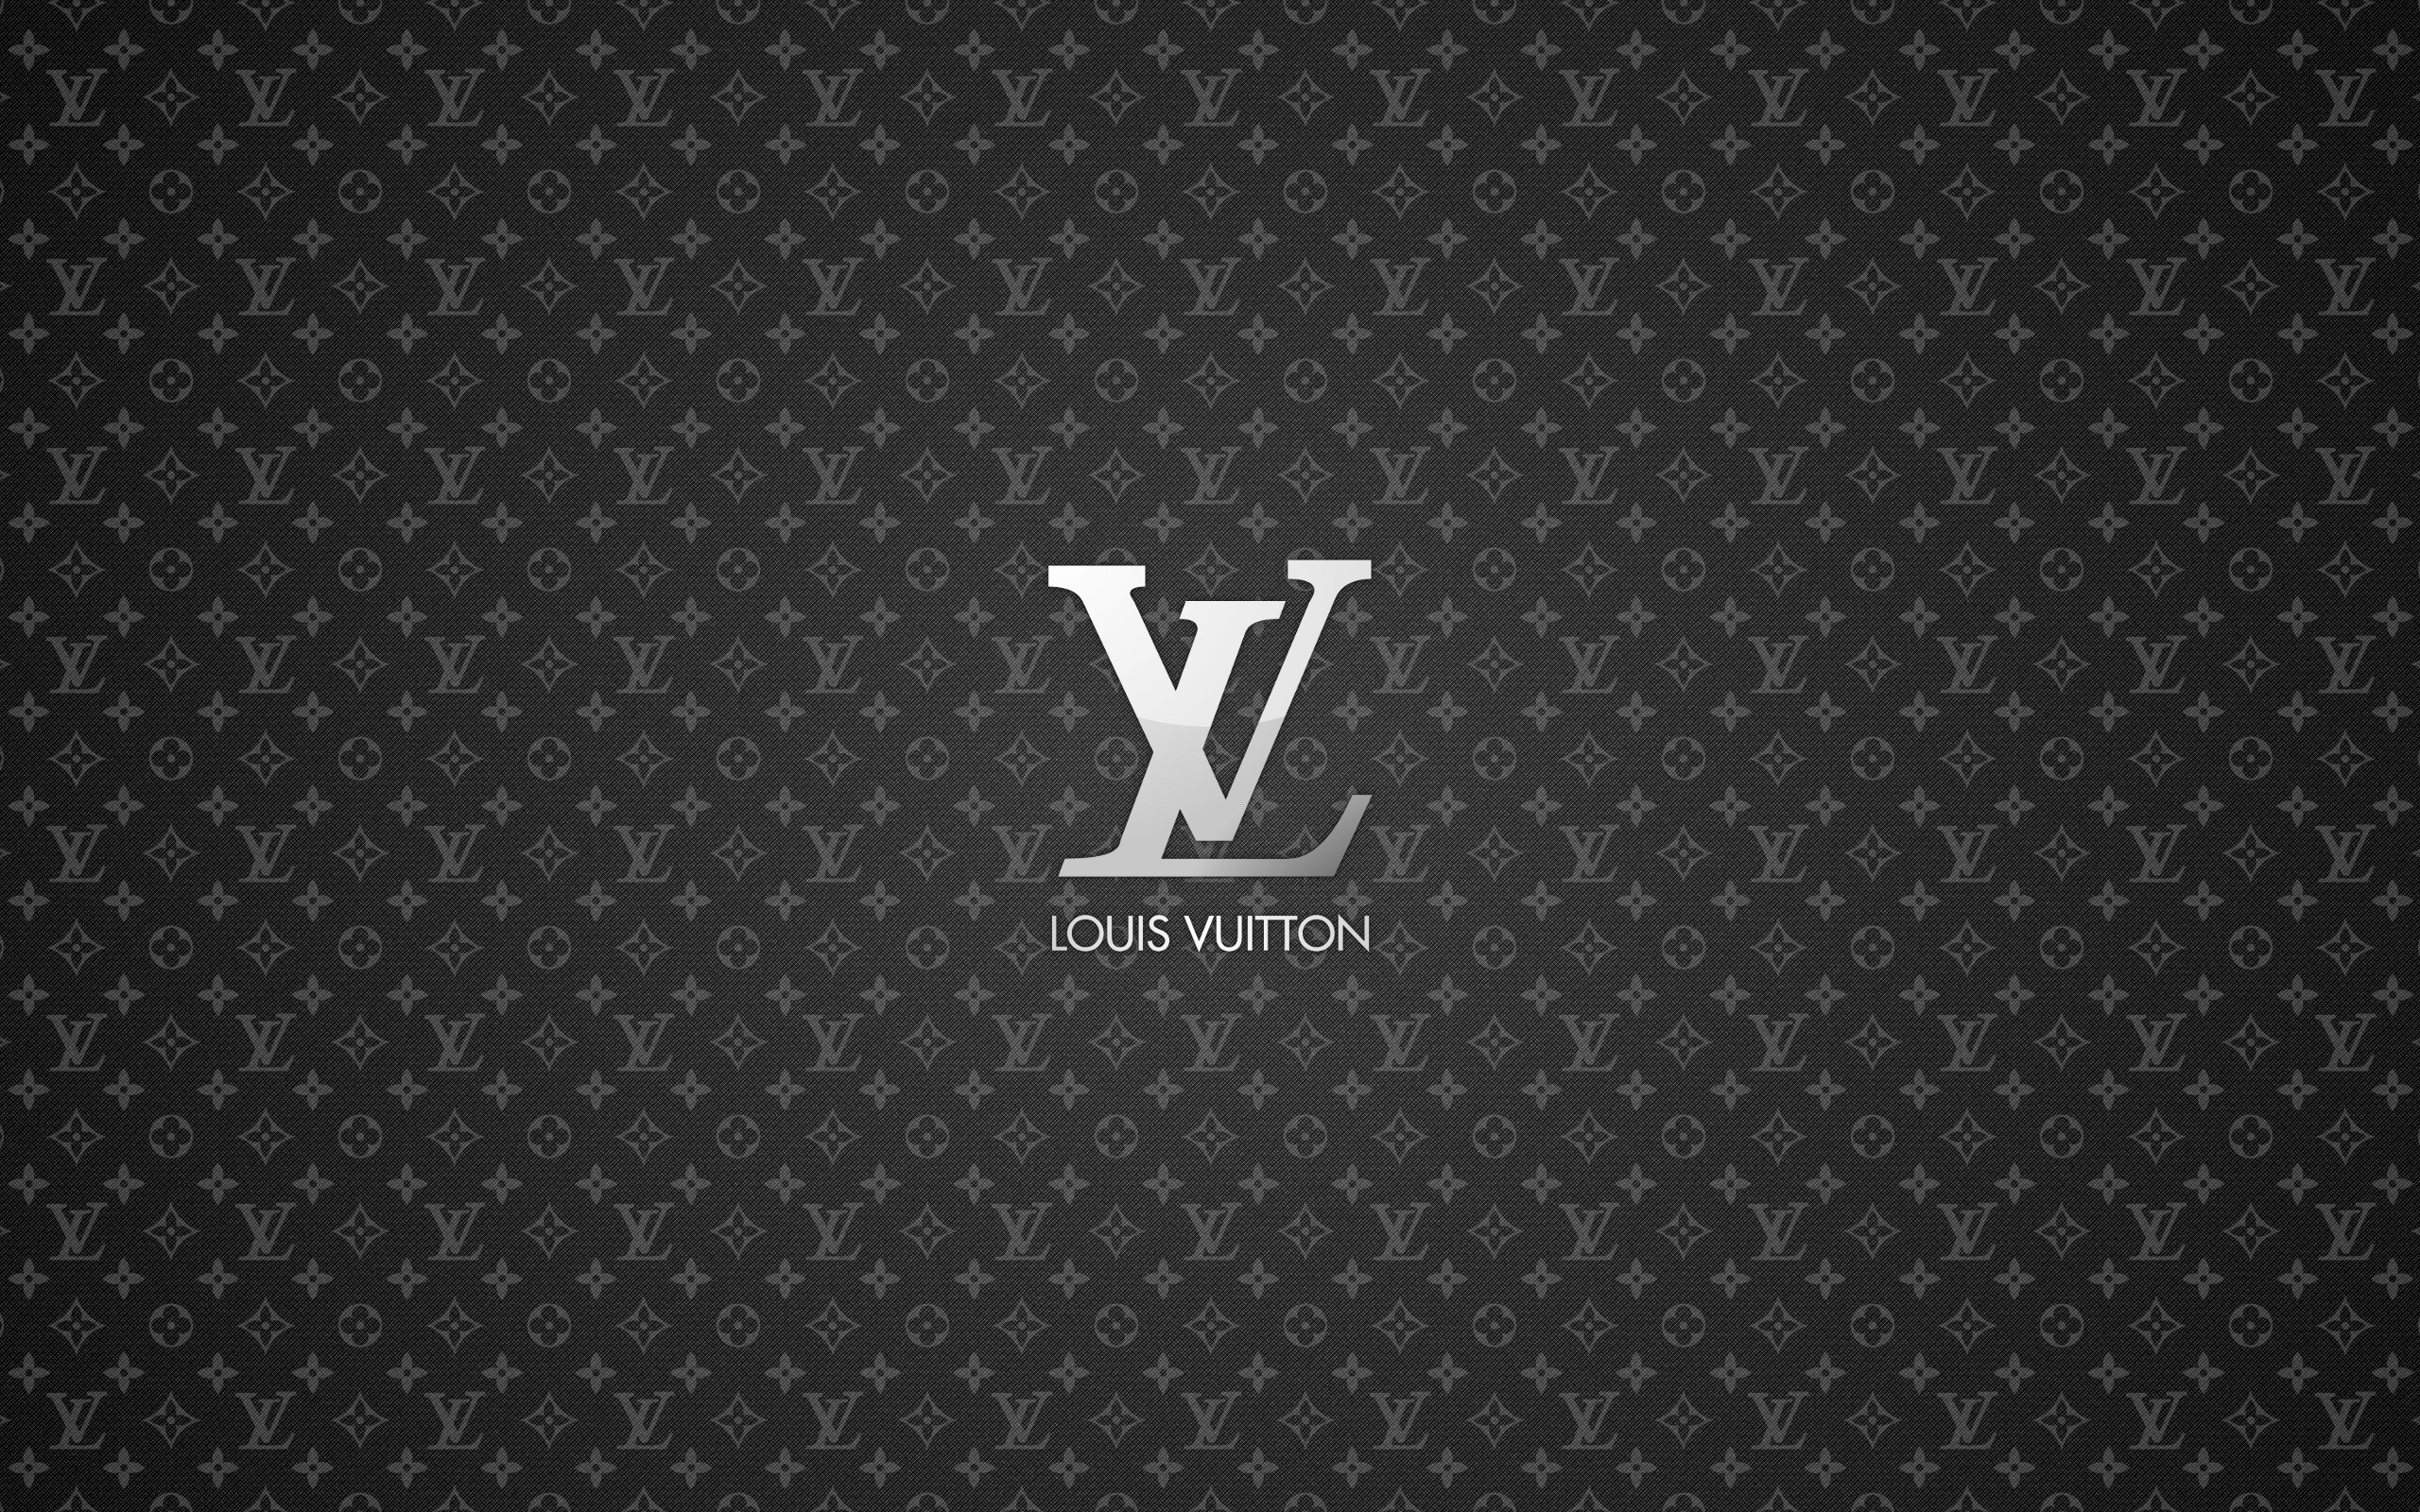 Louis Vuitton for 2560 x 1600 widescreen resolution